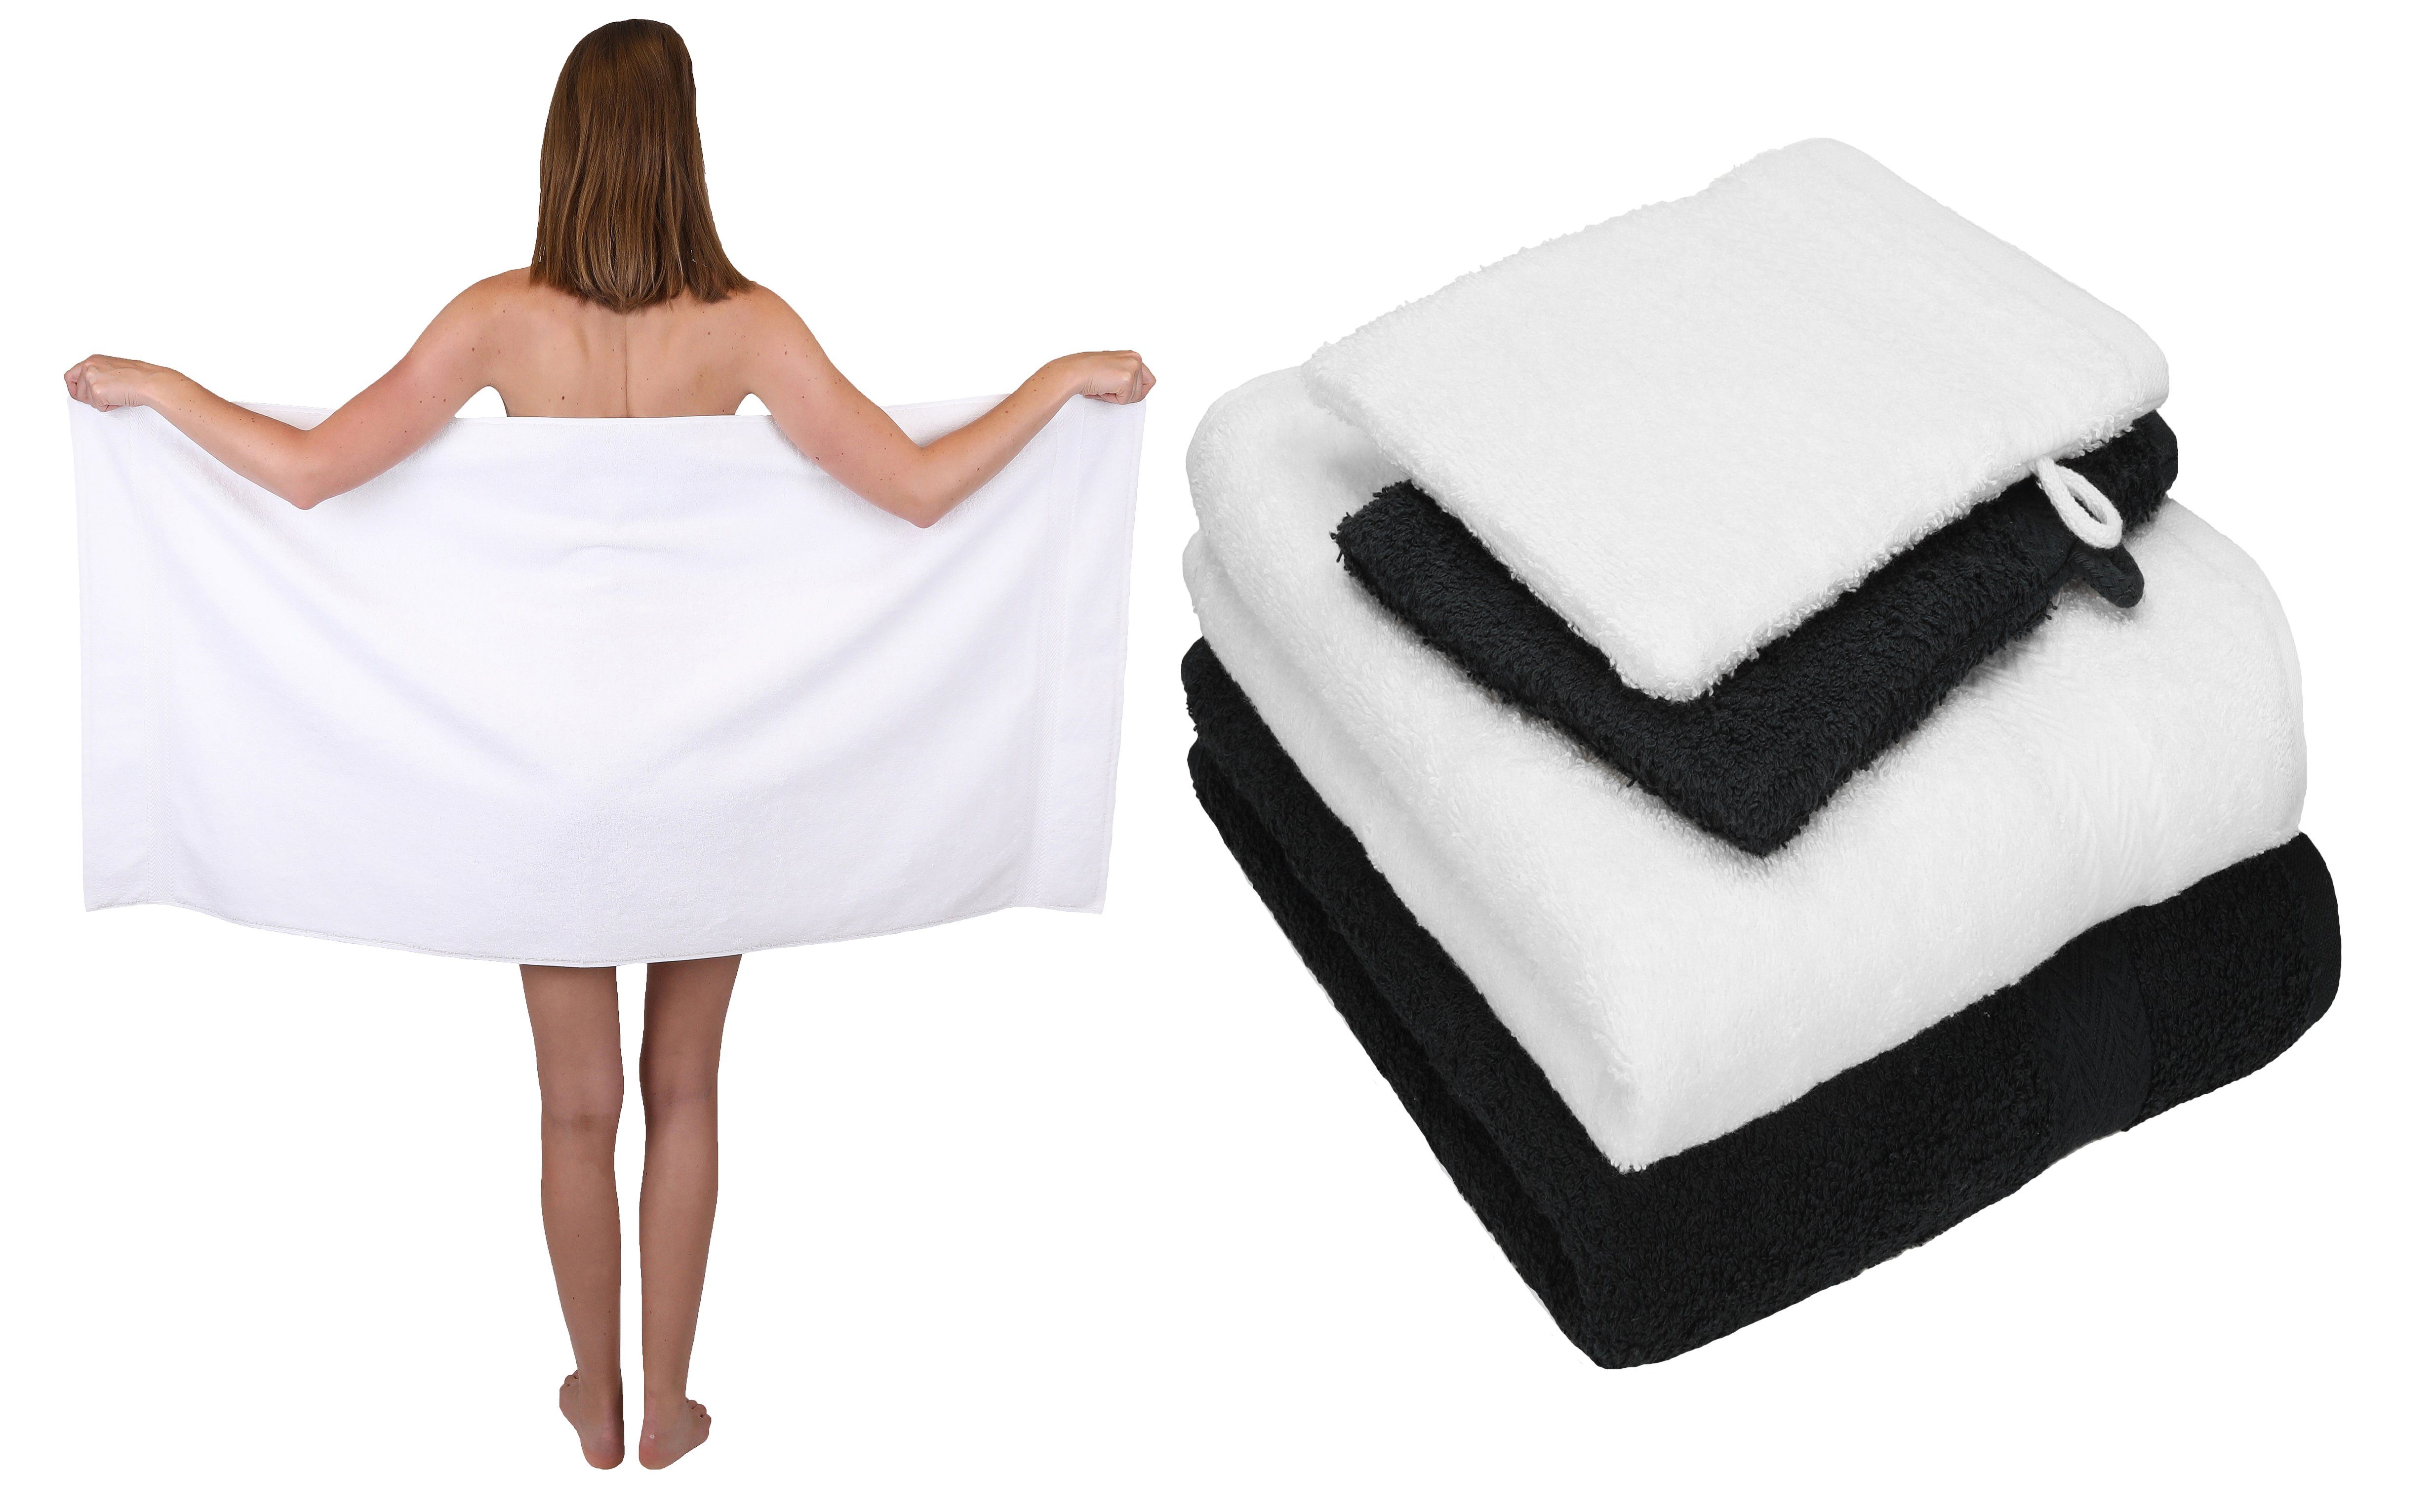 Betz Handtuch Set 5 TLG. Pack Waschhandschuhe, 2 Handtücher 100% Baumwolle Duschtuch 1 Handtuch weiß-schwarz Single 2 Set 100% Baumwolle